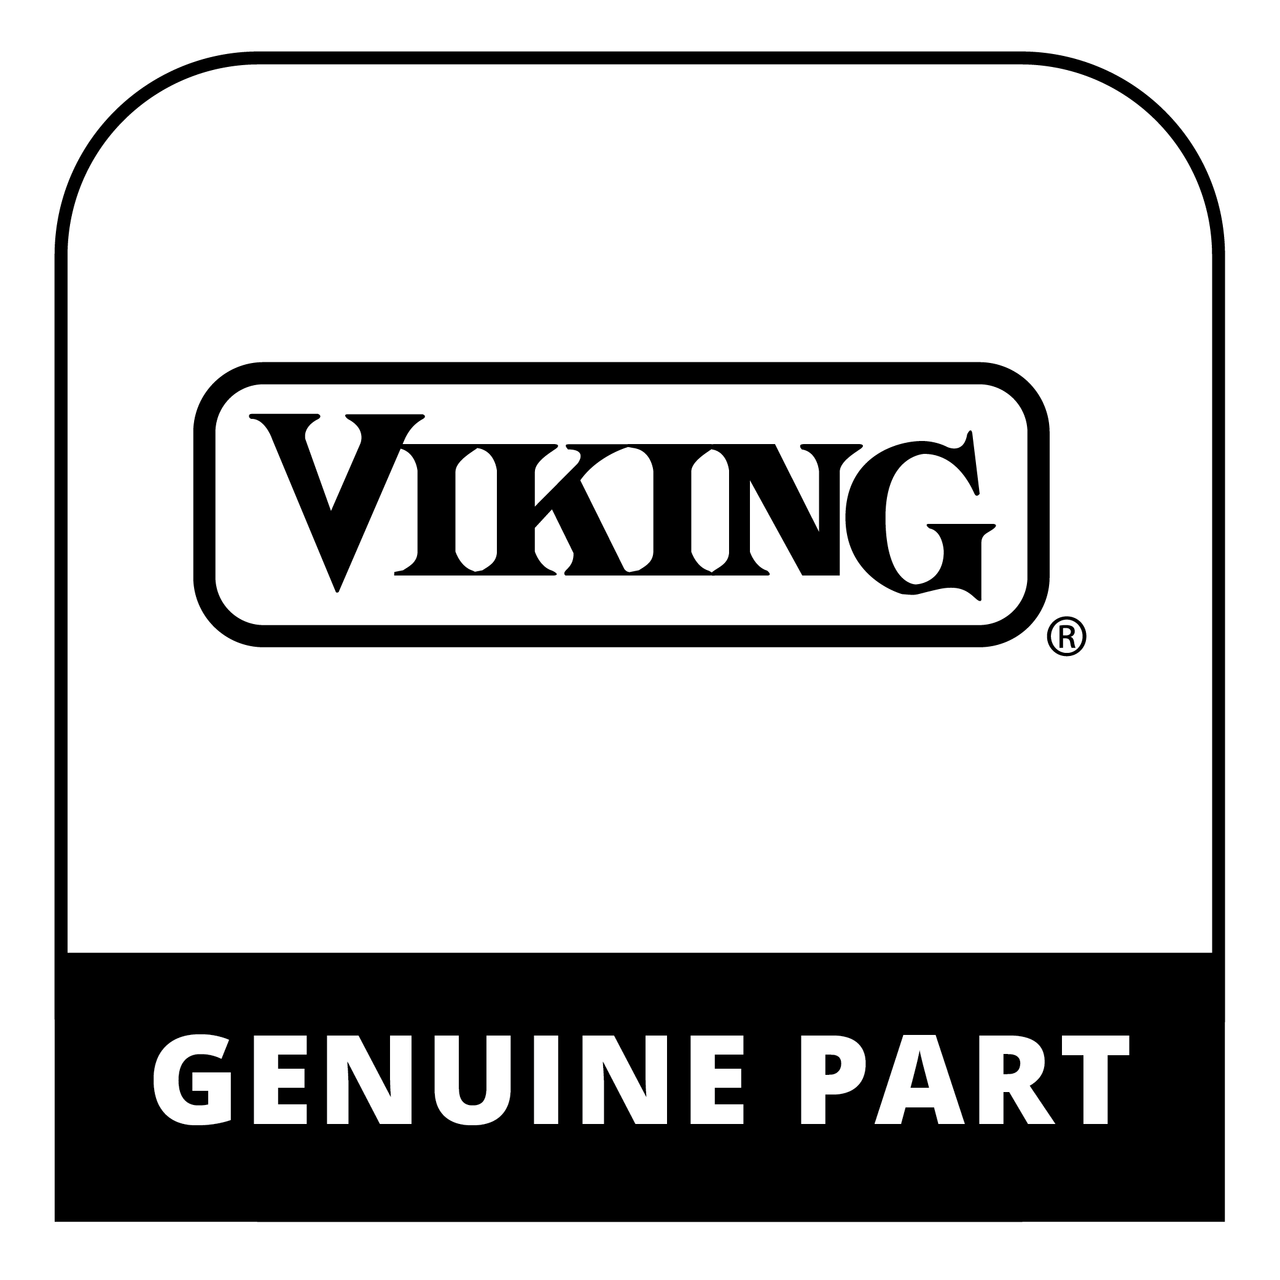 Viking 022309-000 - CONVECTION MOTOR CAPACITOR - Genuine Viking Part